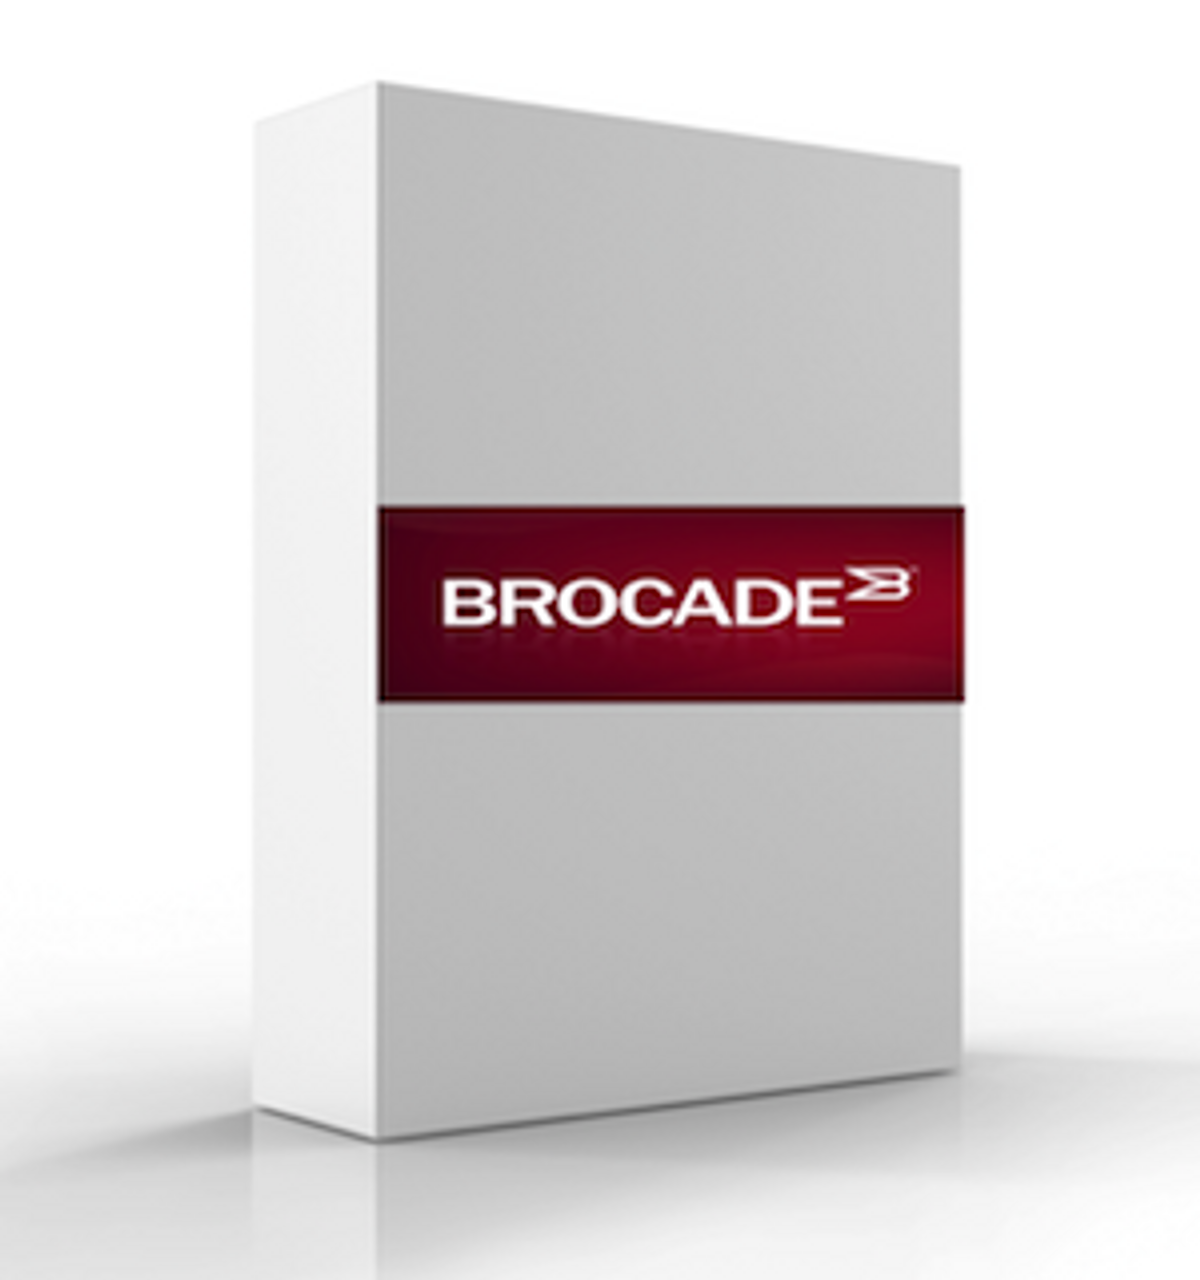 BR-SMEDEXF-01 - Brocade EXTENDED FABRIC LICENSE